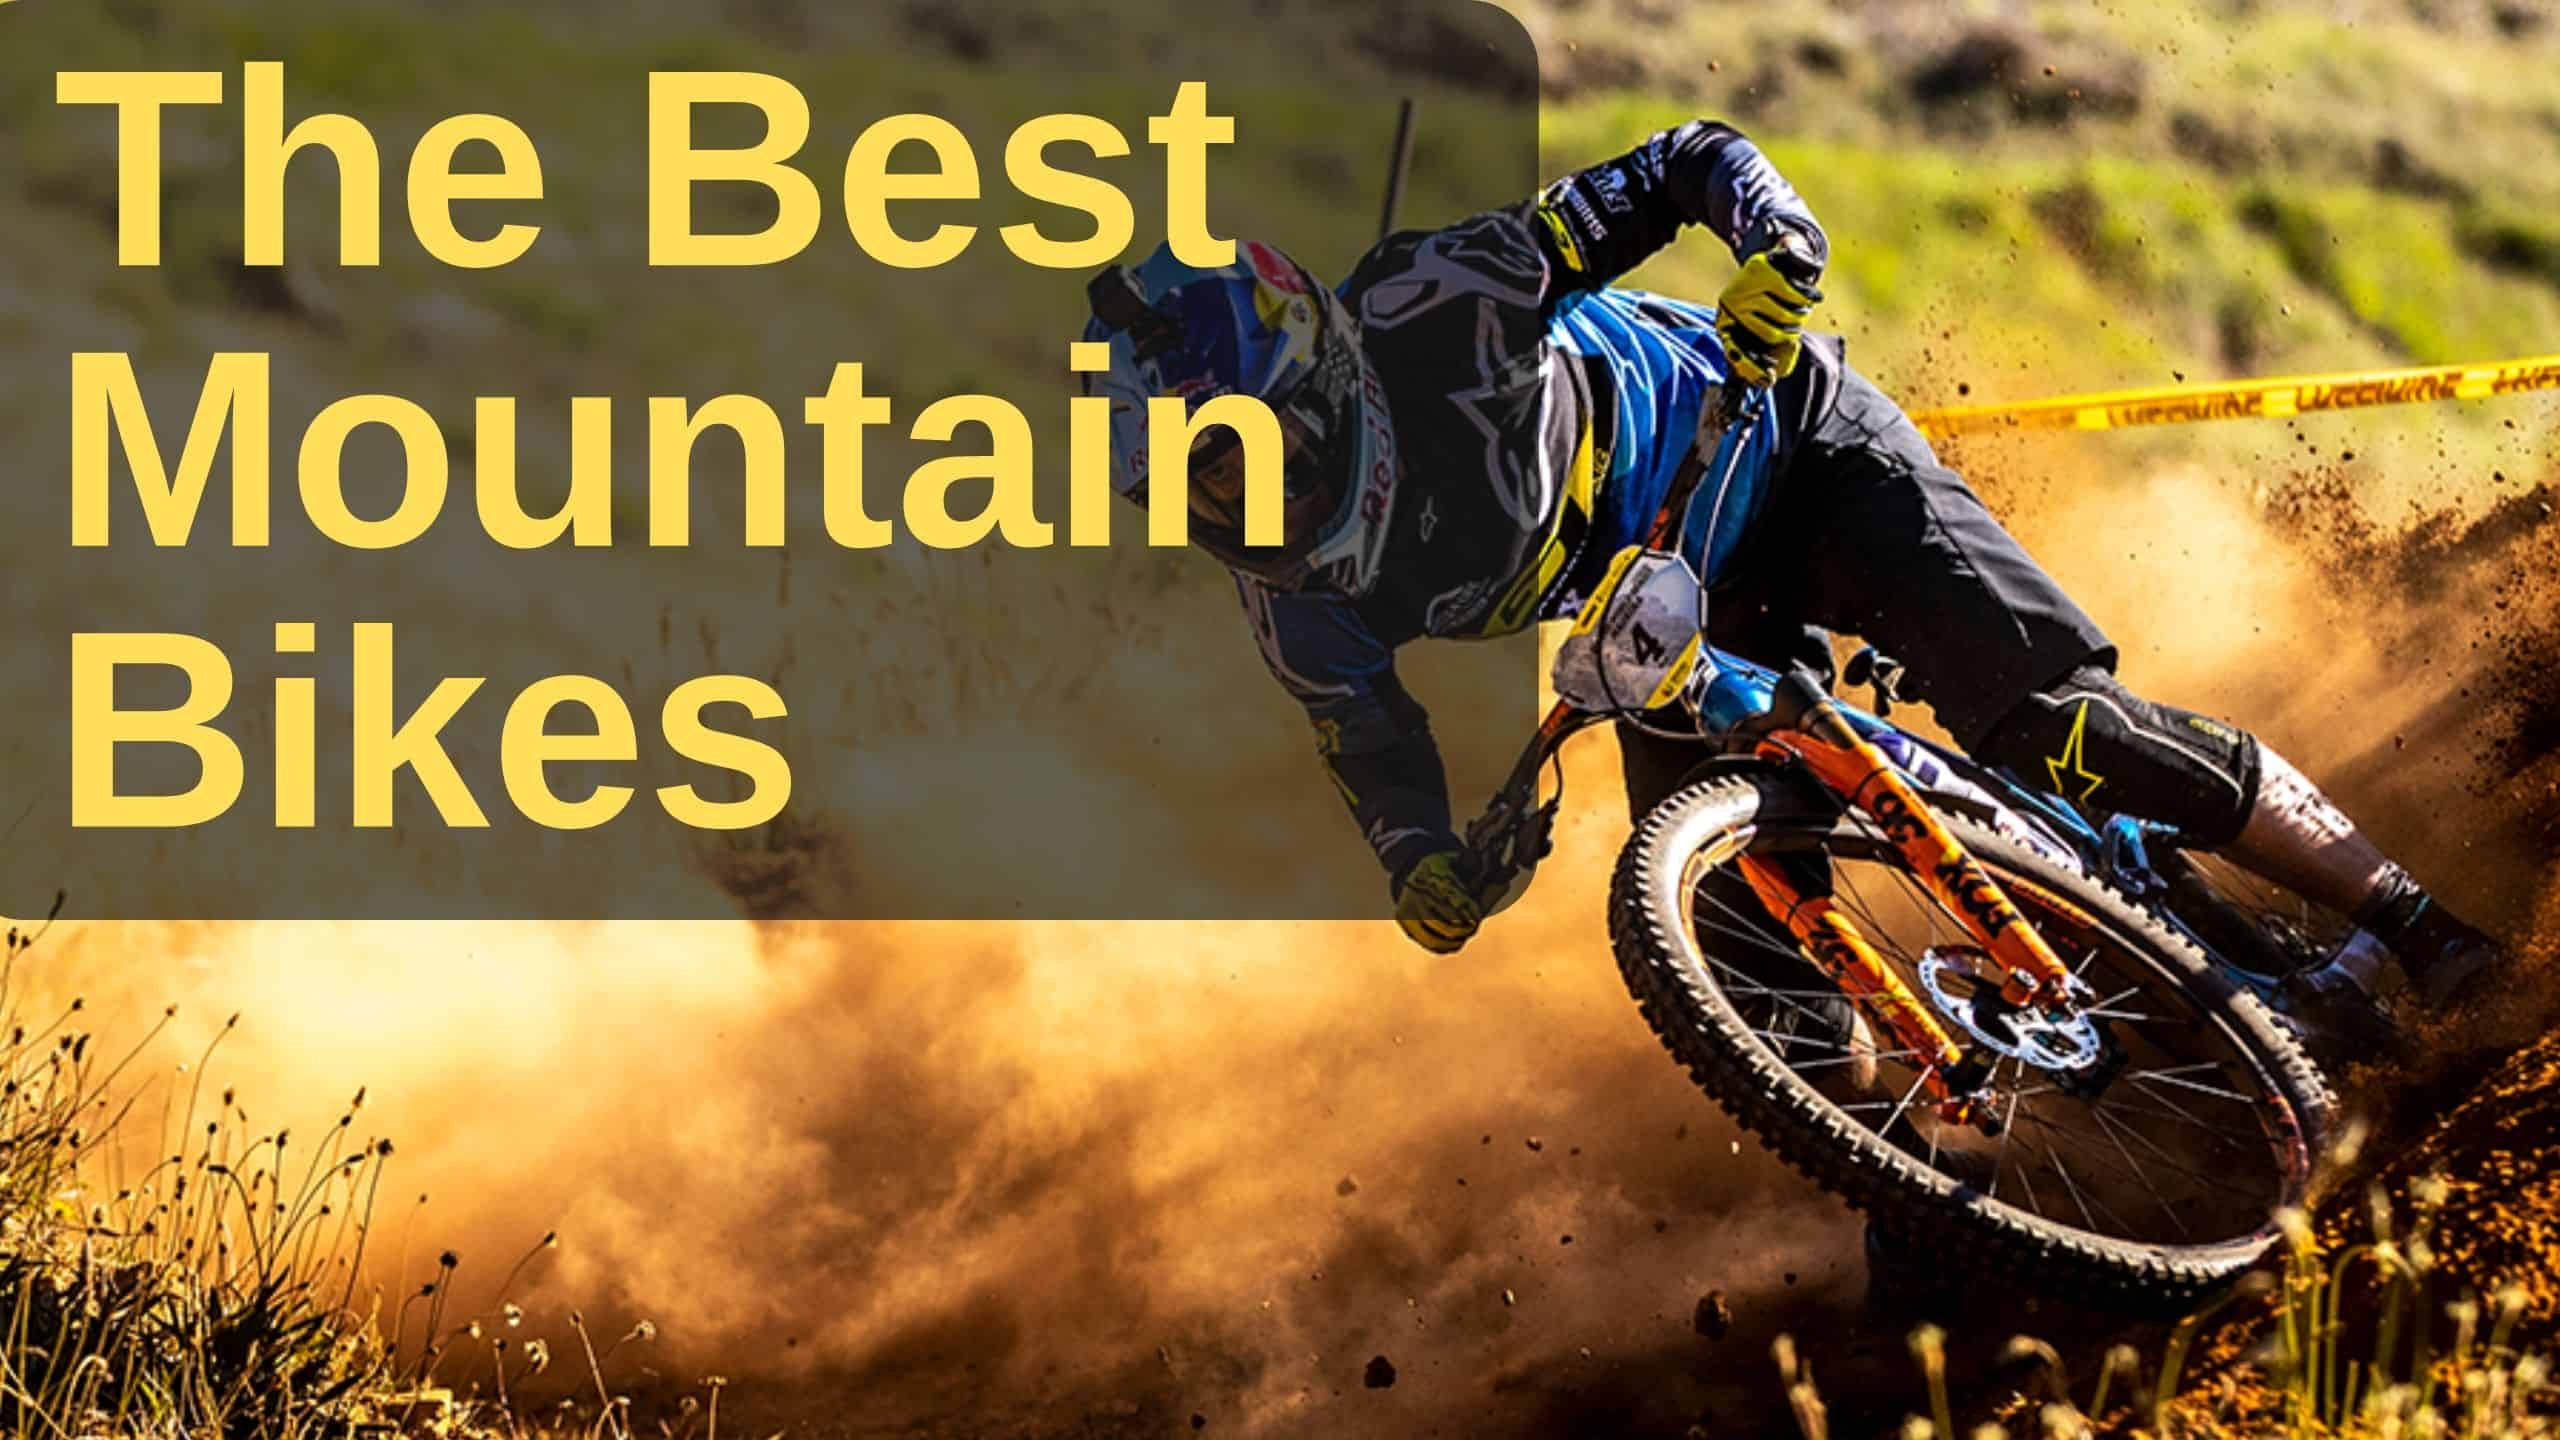 Who Makes the Best Mountain Bikes